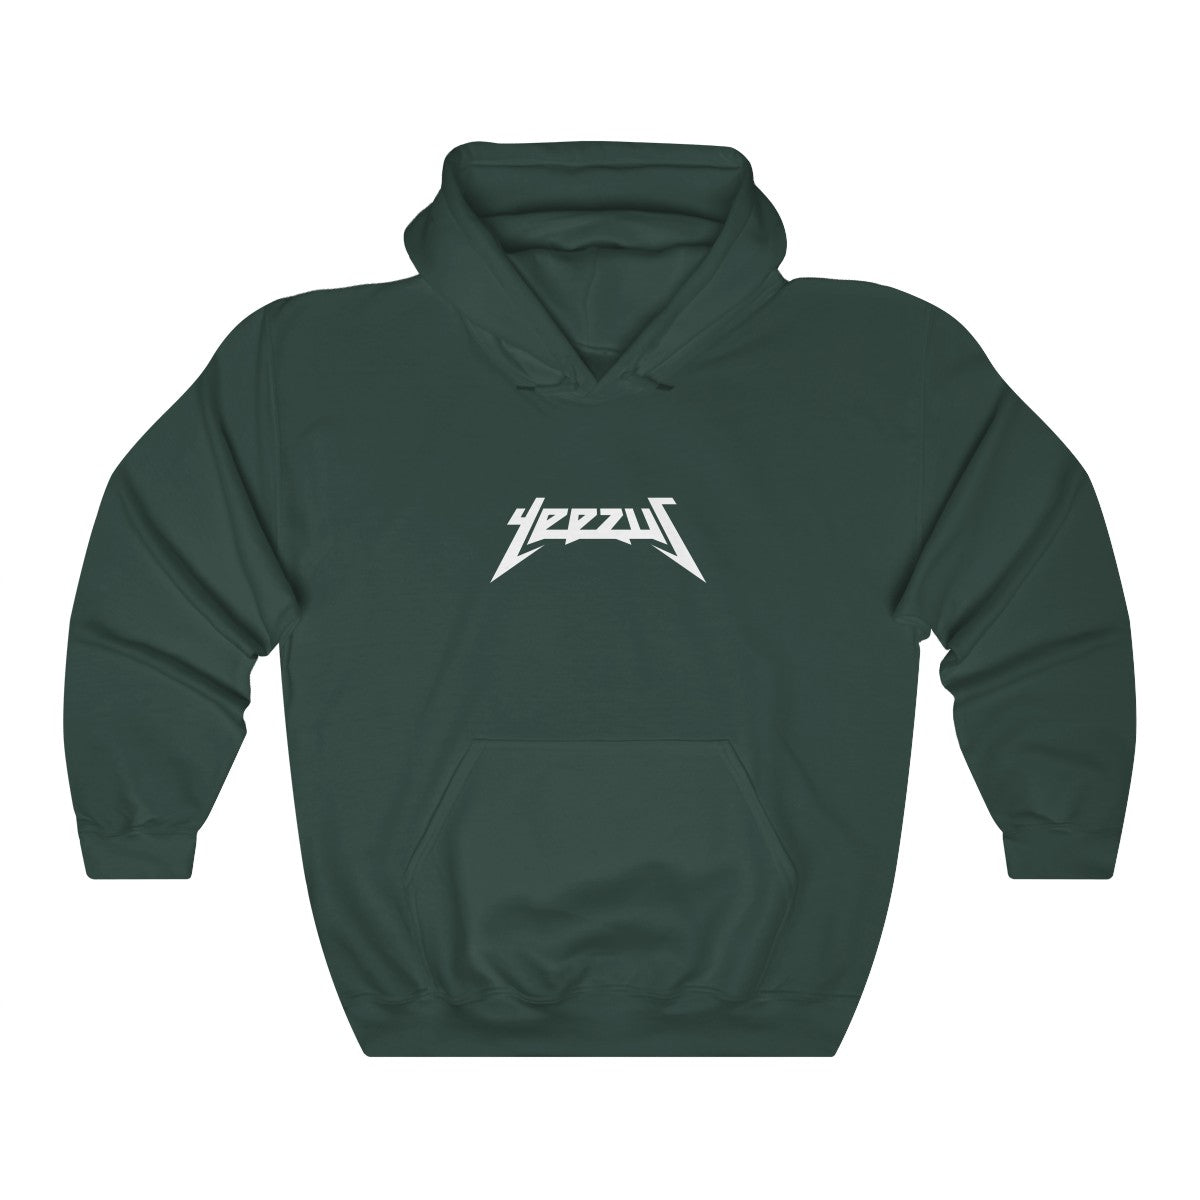 Yeezus Unisex Heavy Blend Hooded Sweatshirt-Forest Green-S-Archethype